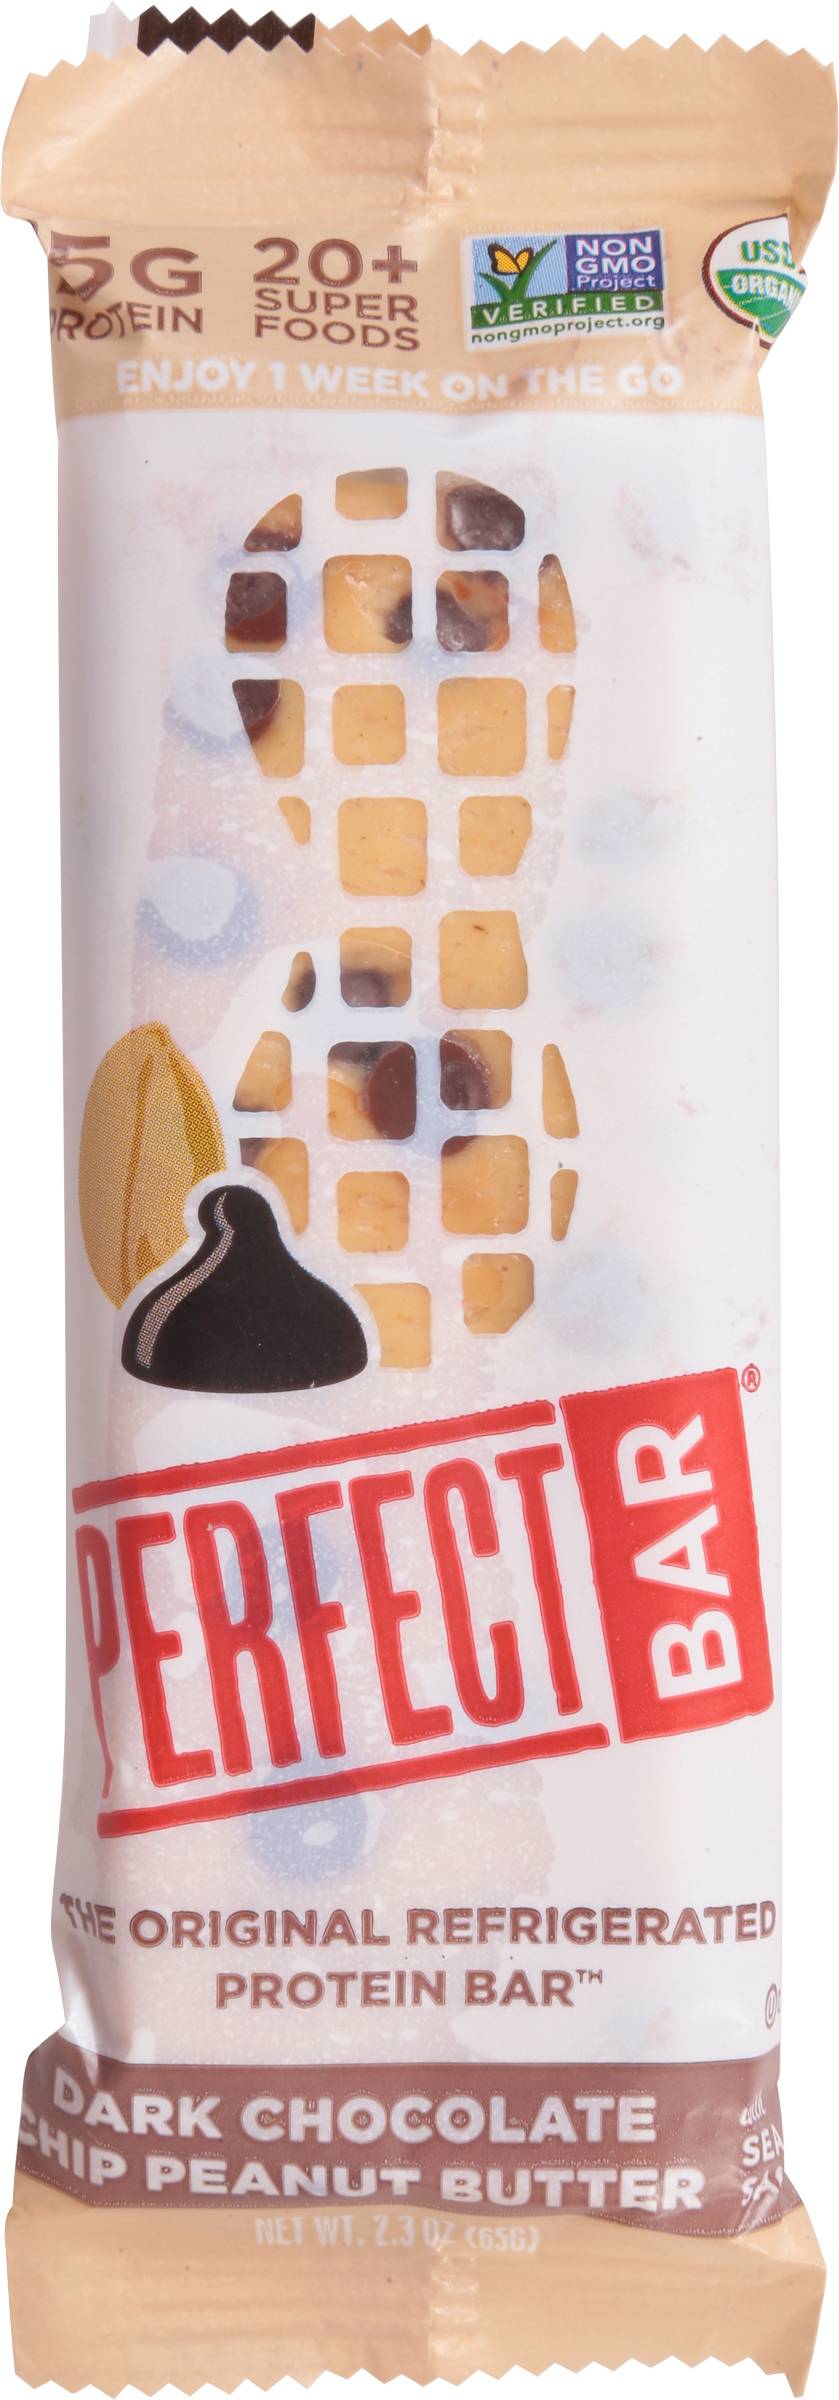 Perfect Bar Protein Bar (dark chocolate chip peanut butter)